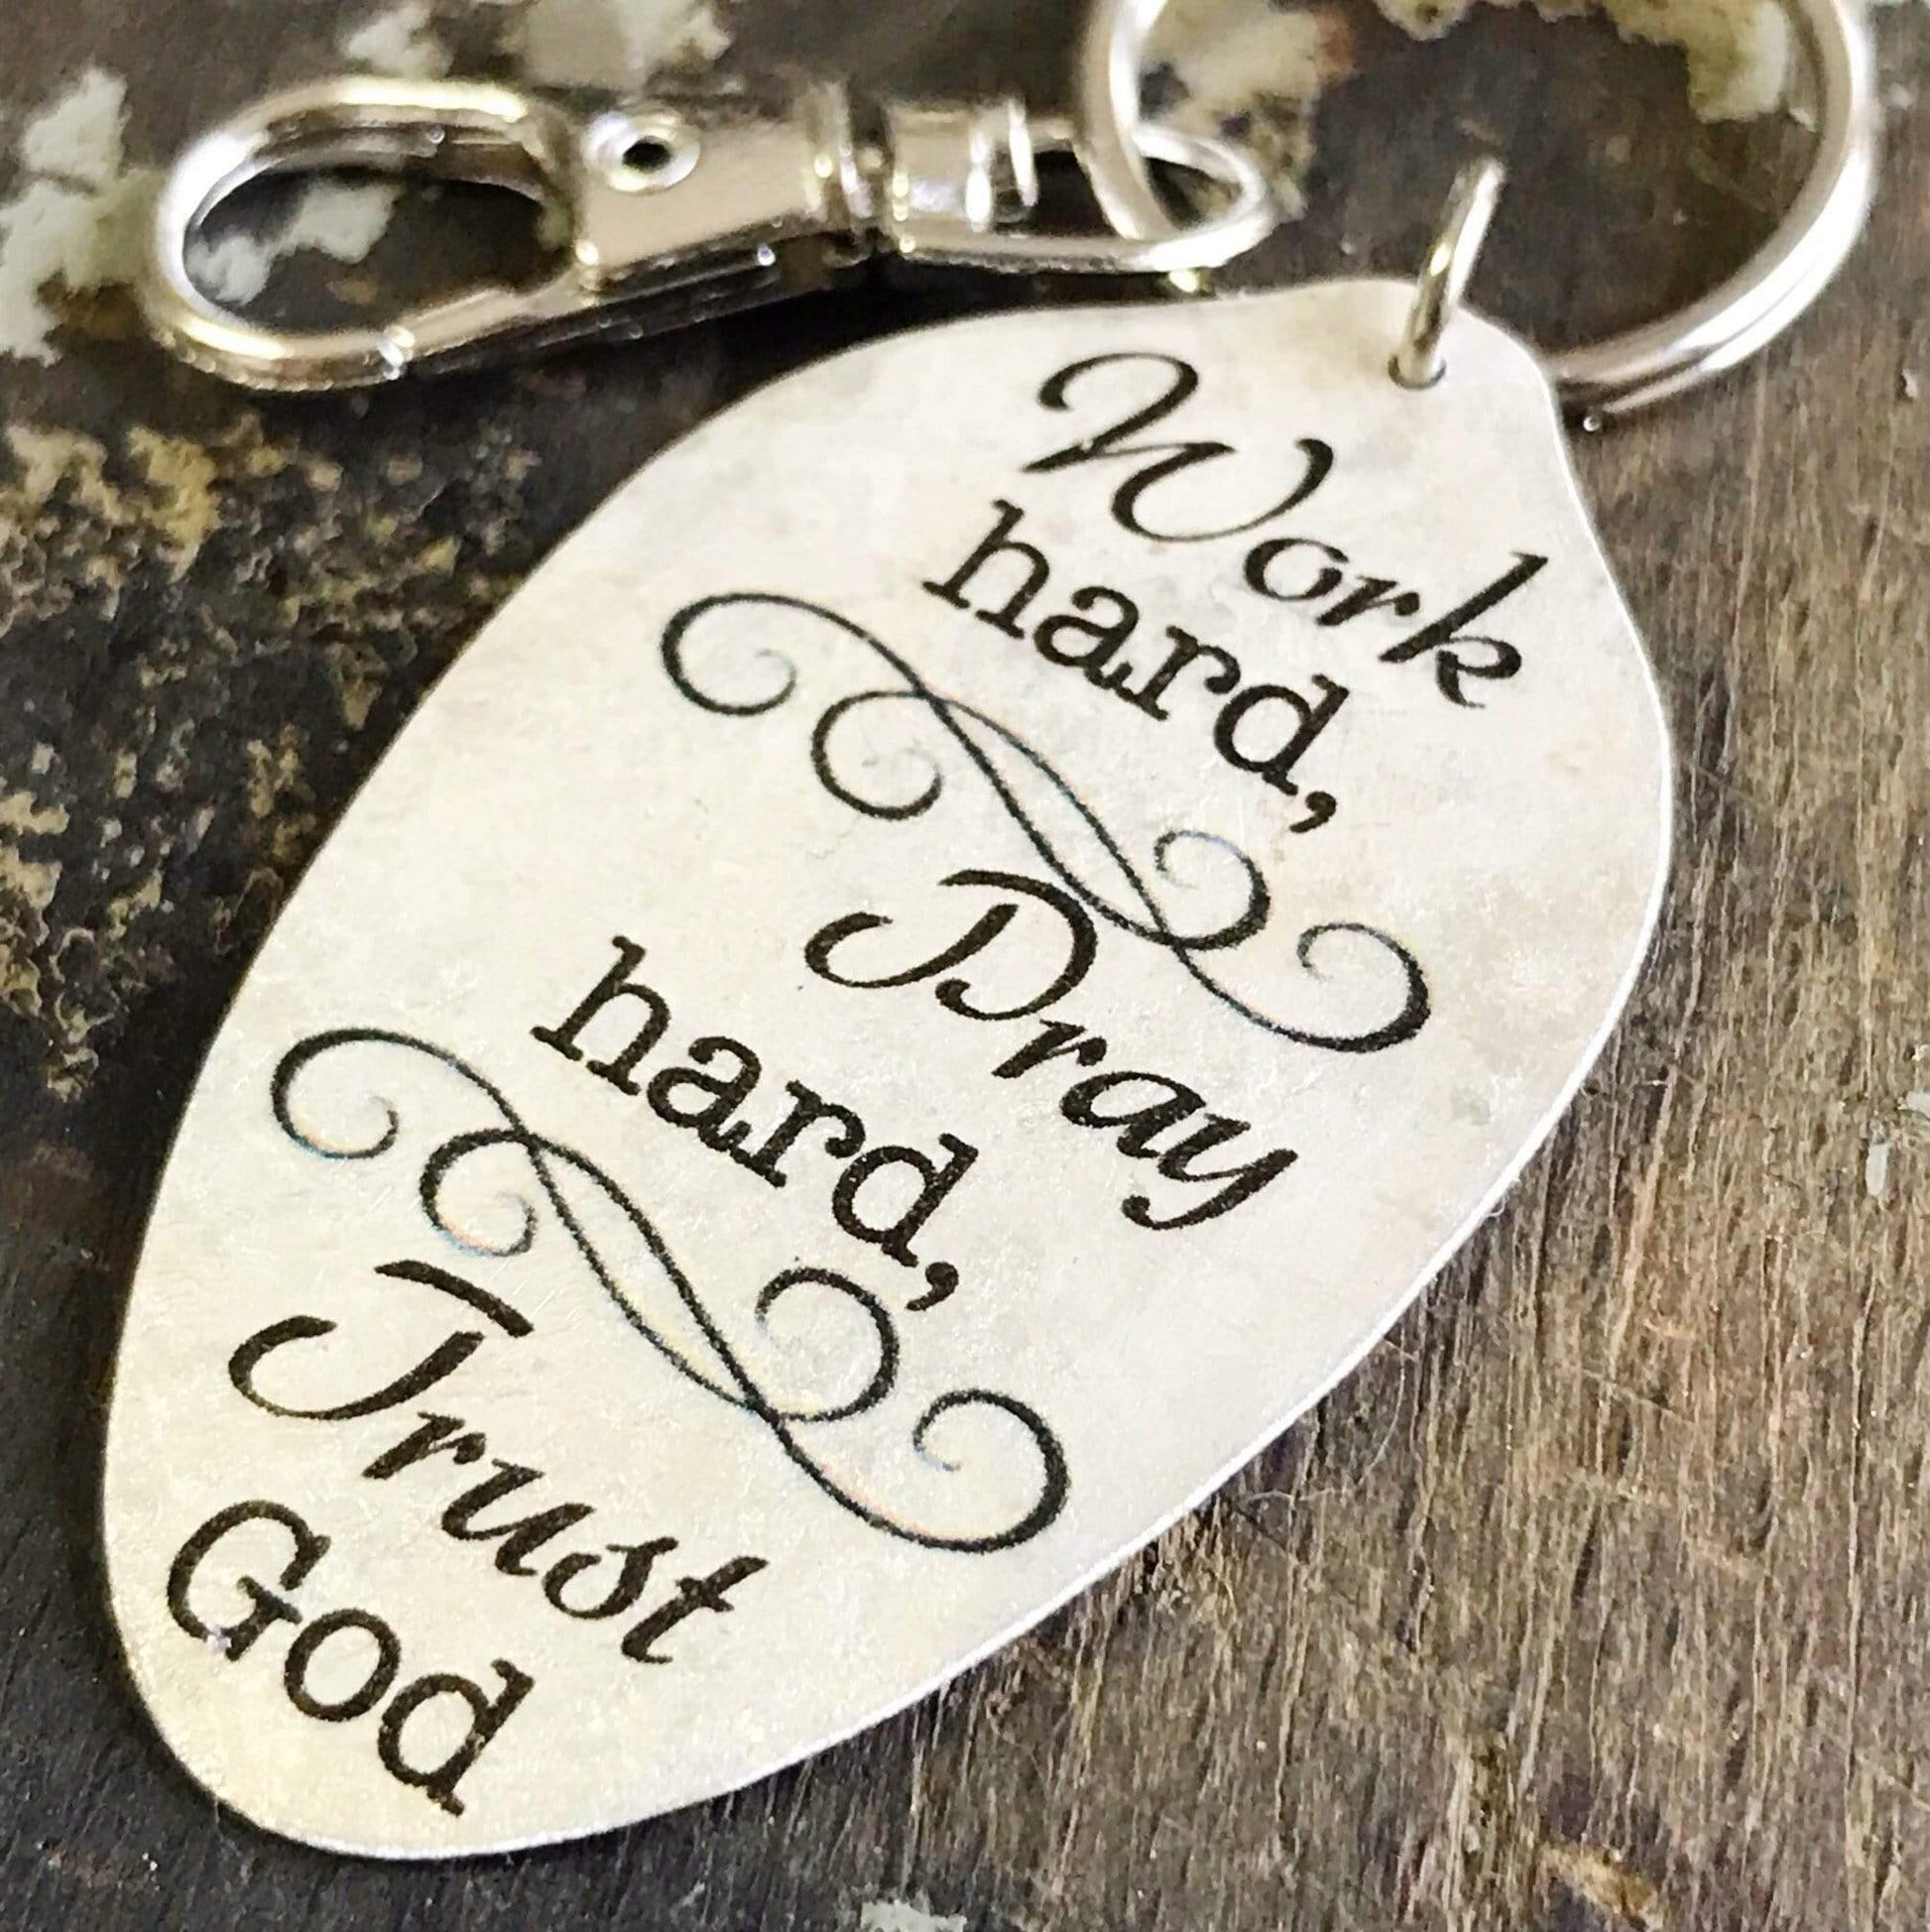 Work Hard, Pray Hard, Trust God spoon pendant keychain by Kyleemae Designs, Religious Inspirational Keychain, Inspirational Gift - KyleeMae Designs